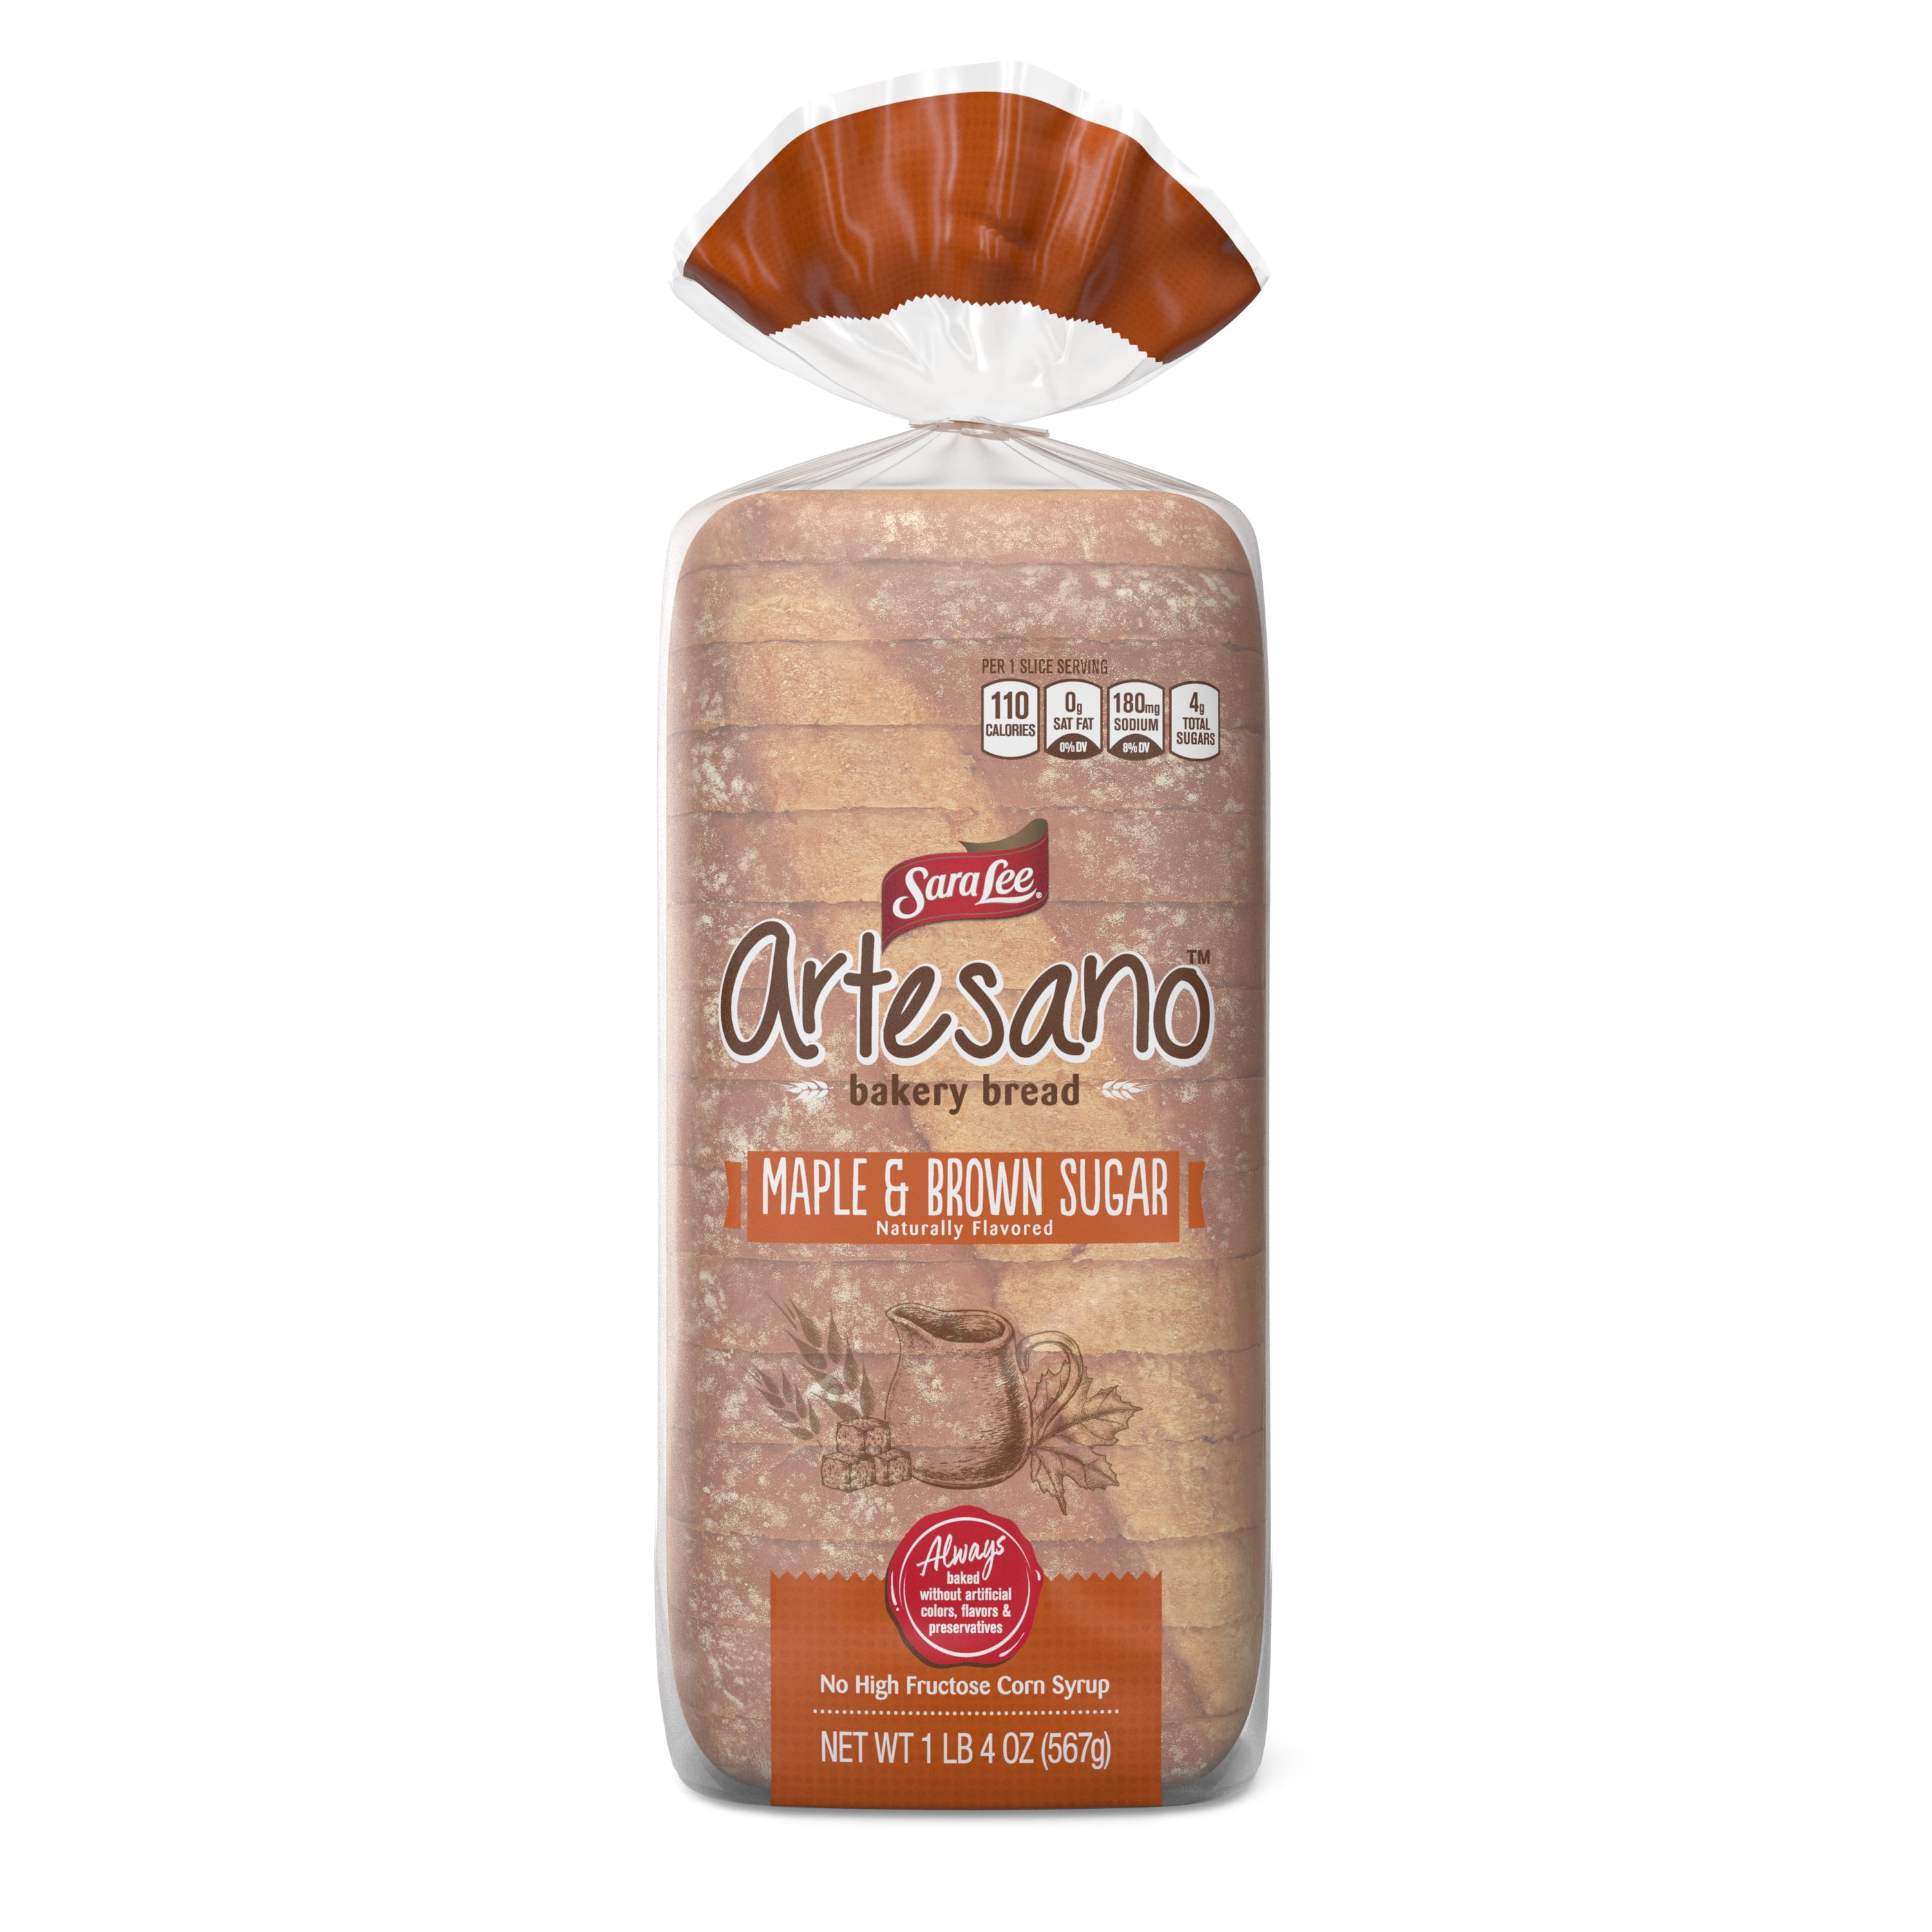 Sara Lee Artesano Maple & Brown Sugar Split Top Bread, Naturally Flavored, No Artificial Colors or Flavors, 15 Slices, 20 Ounce Loaf